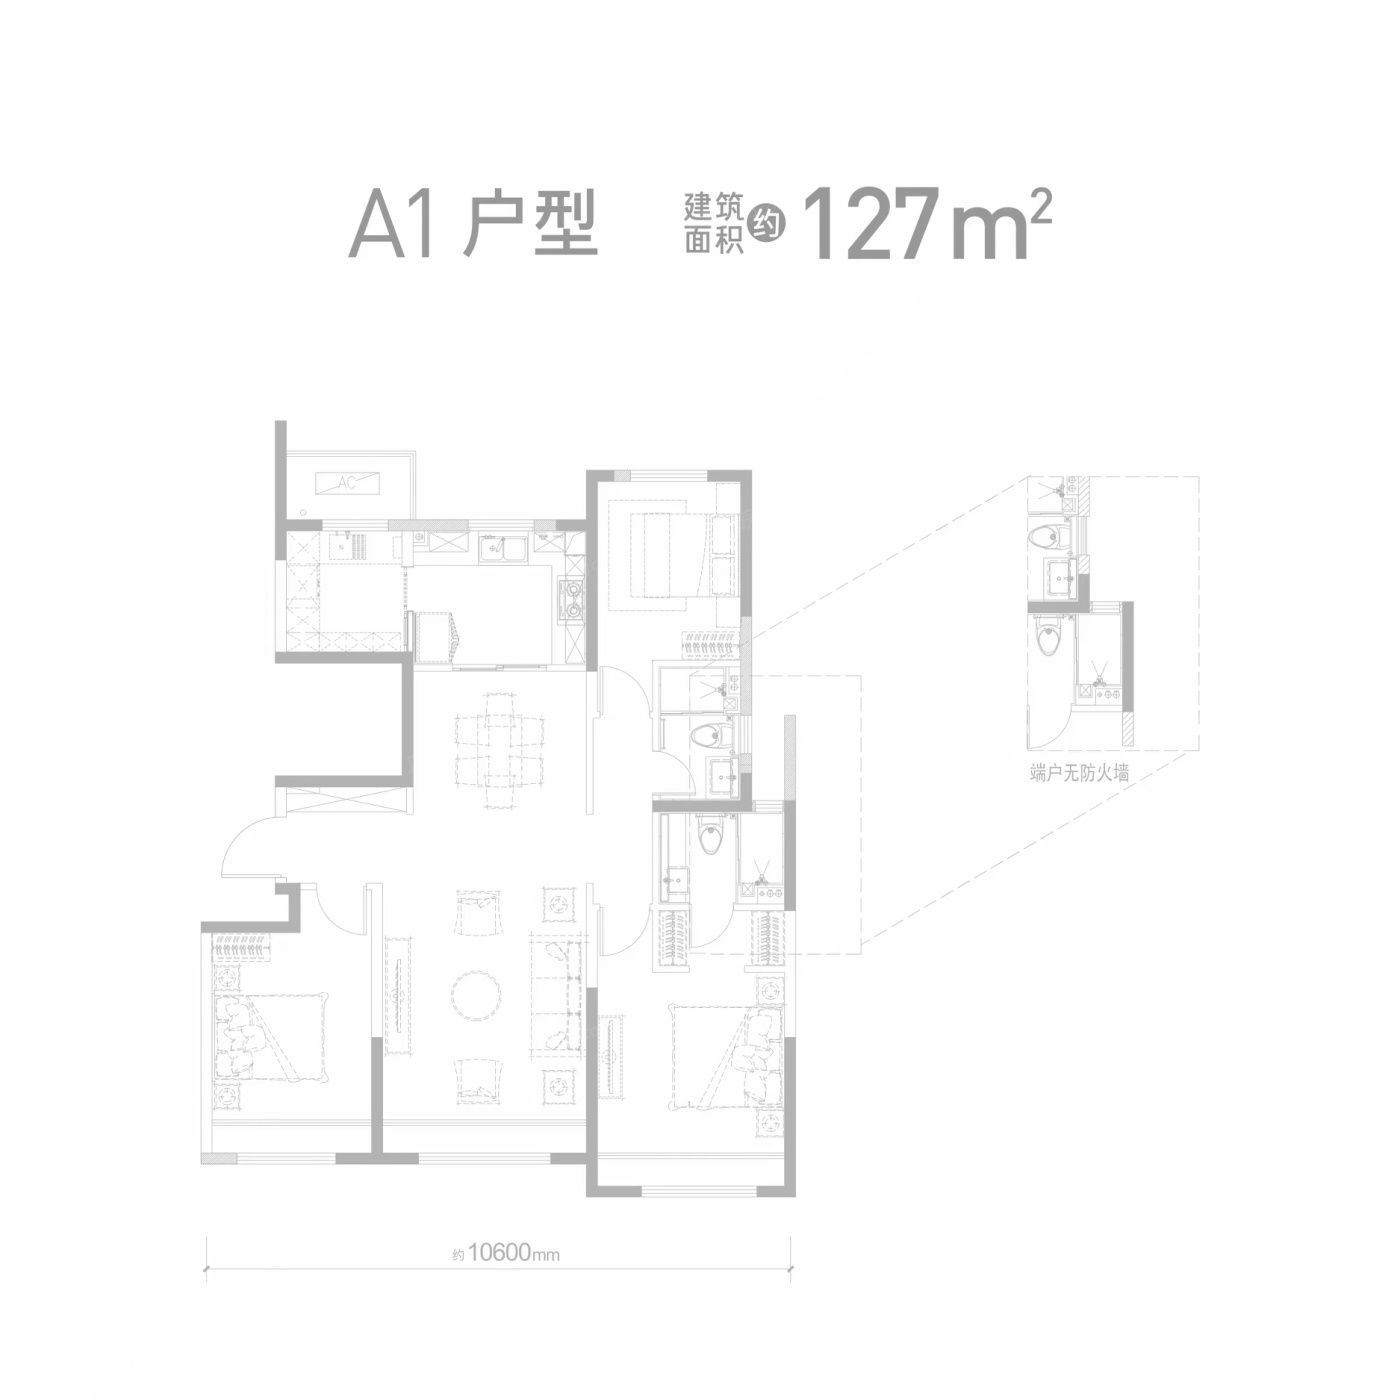 A1户型 3室2厅2卫 127平米